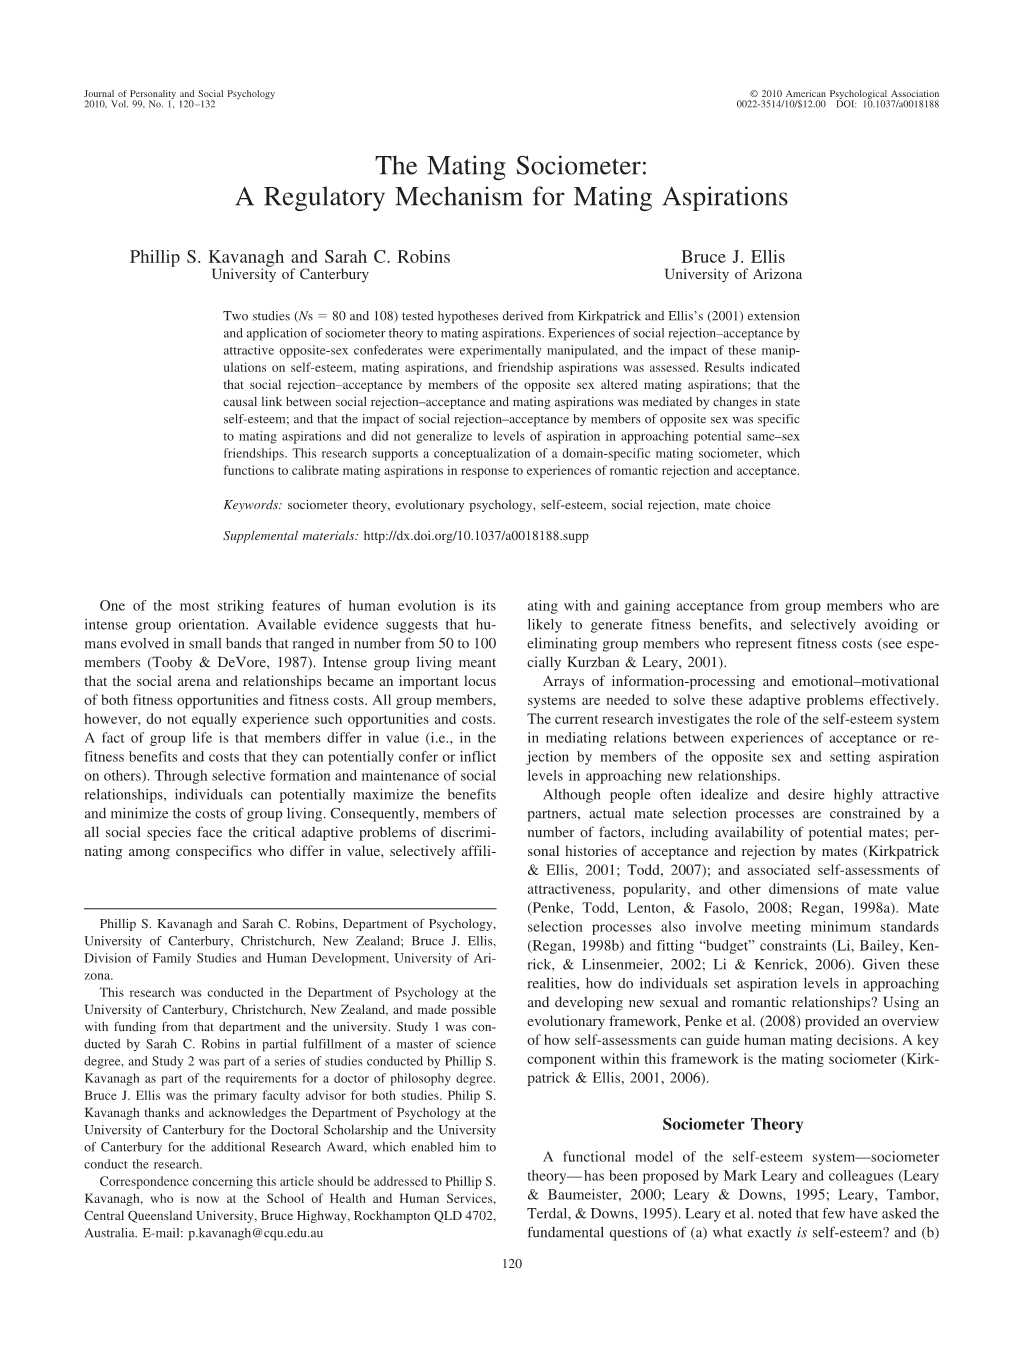 The Mating Sociometer: a Regulatory Mechanism for Mating Aspirations